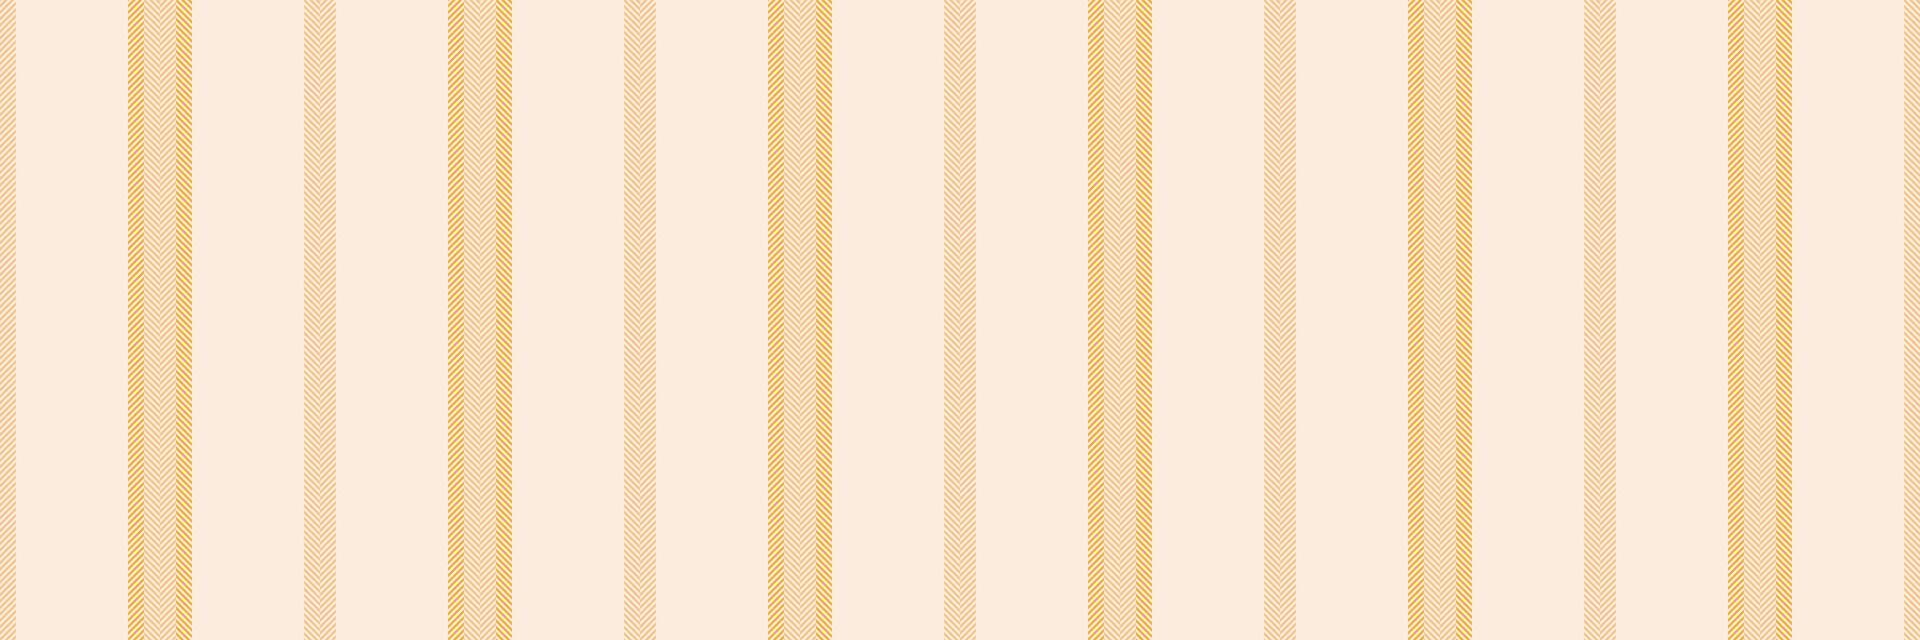 diciembre vertical raya tela, Reino textura sin costura líneas. prenda modelo textil antecedentes vector en ligero y naranja colores.